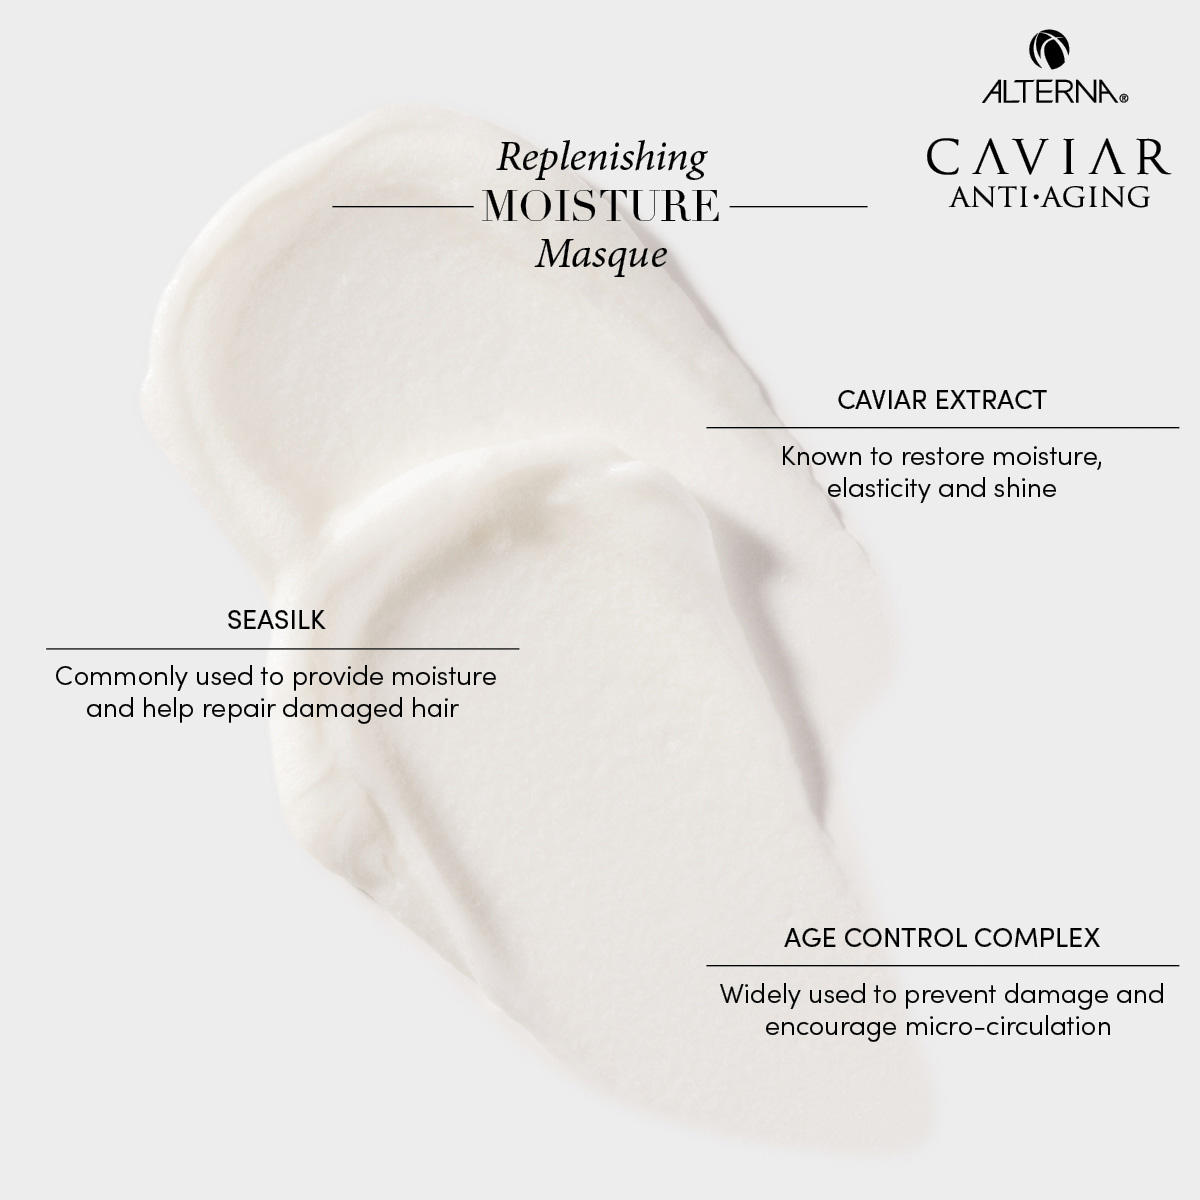 Alterna Caviar Anti-Aging Replenishing Moisture Masque 161 g - 4